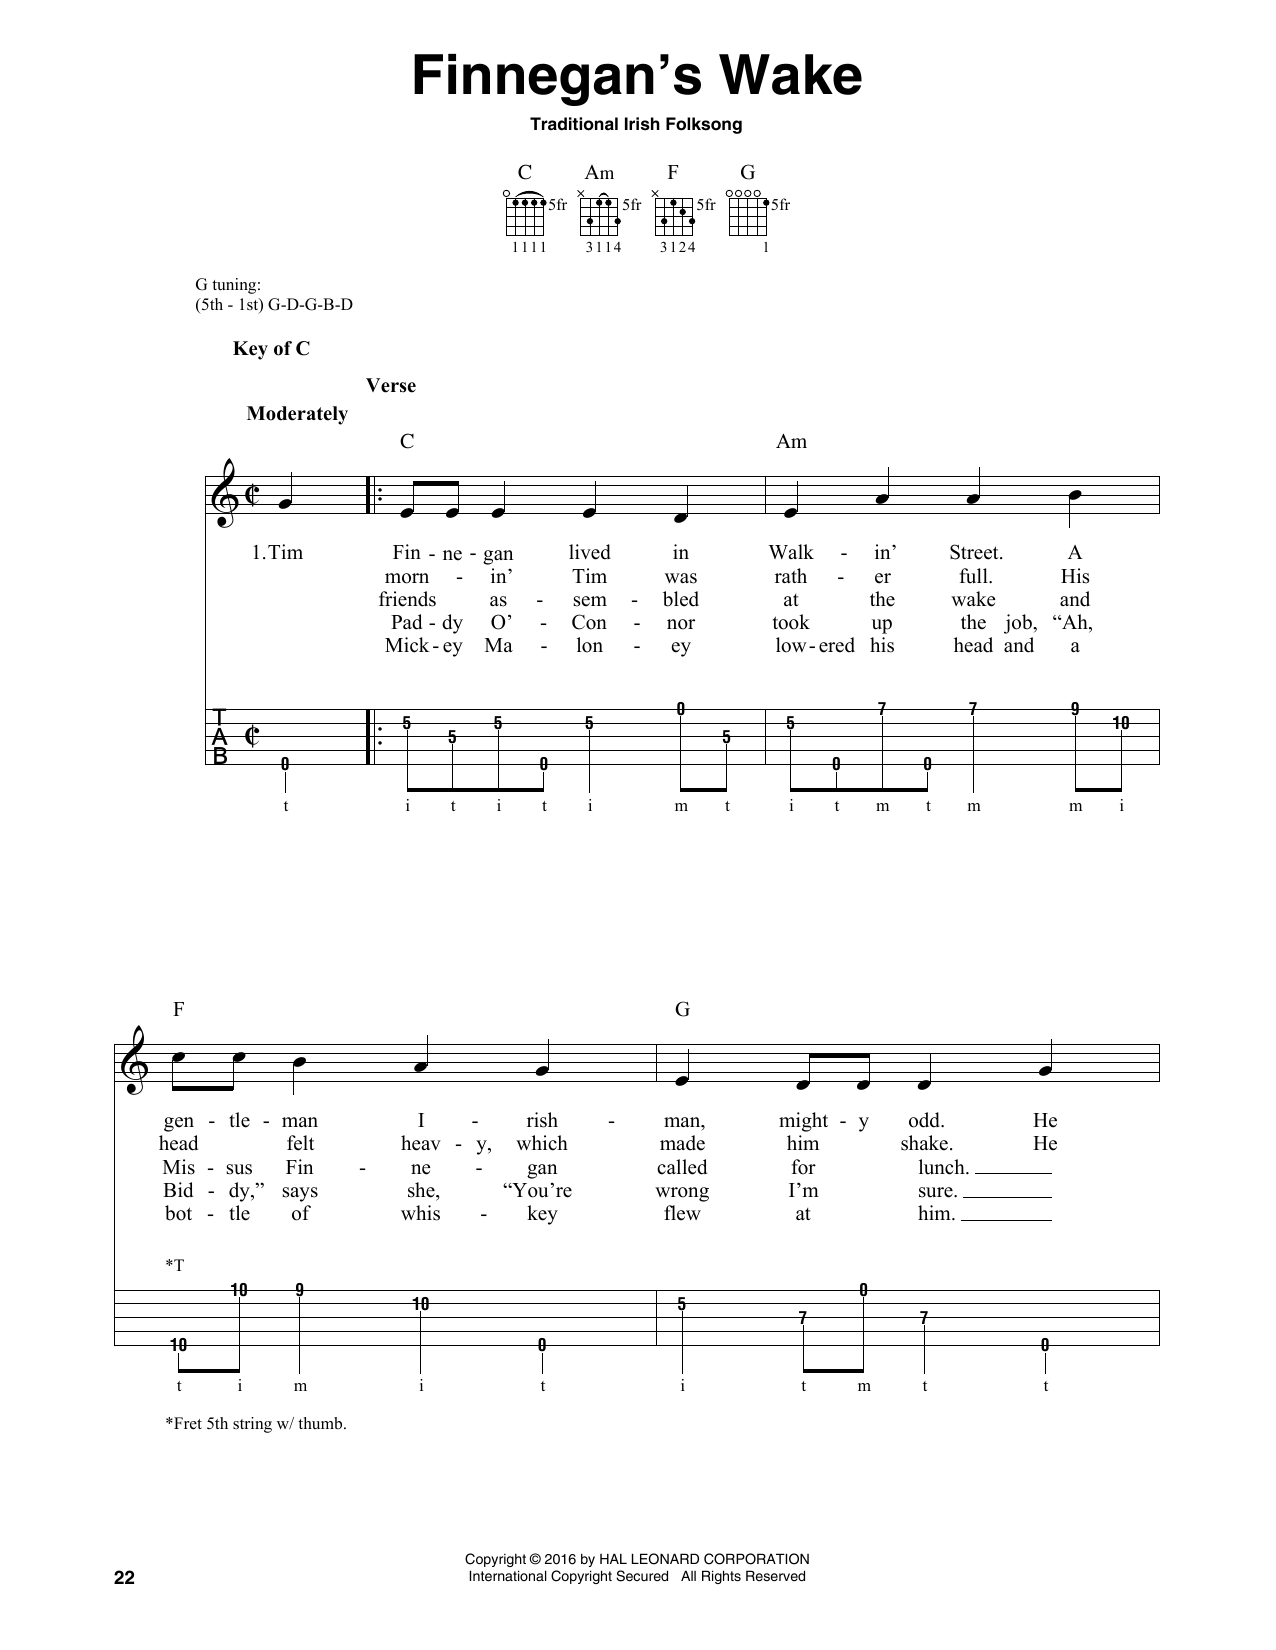 Download Traditional Irish Folk Song Finnegan's Wake Sheet Music